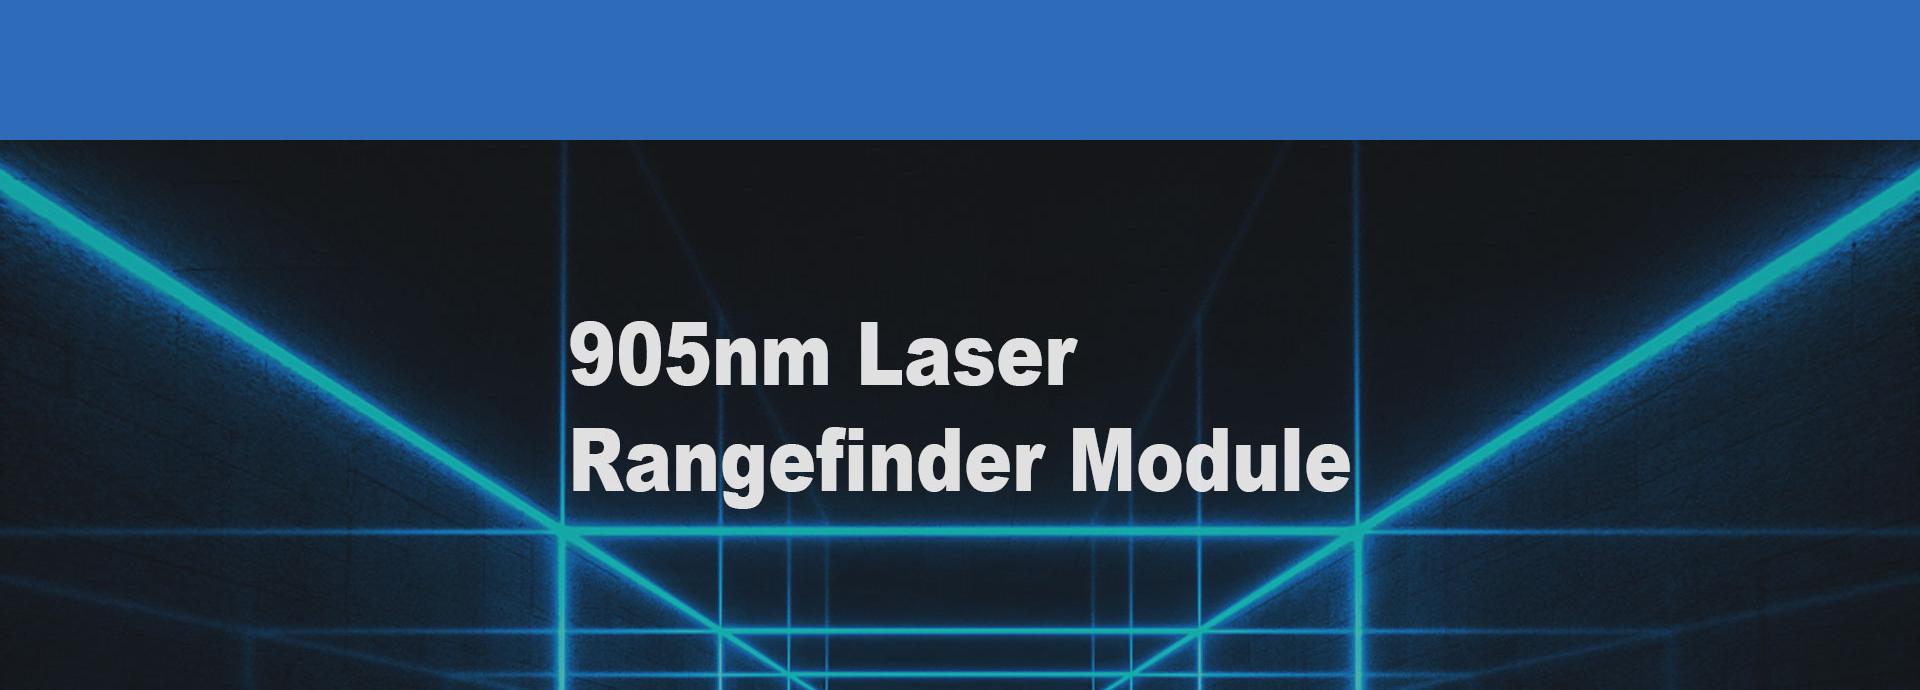 1km Laser Range Finder Module